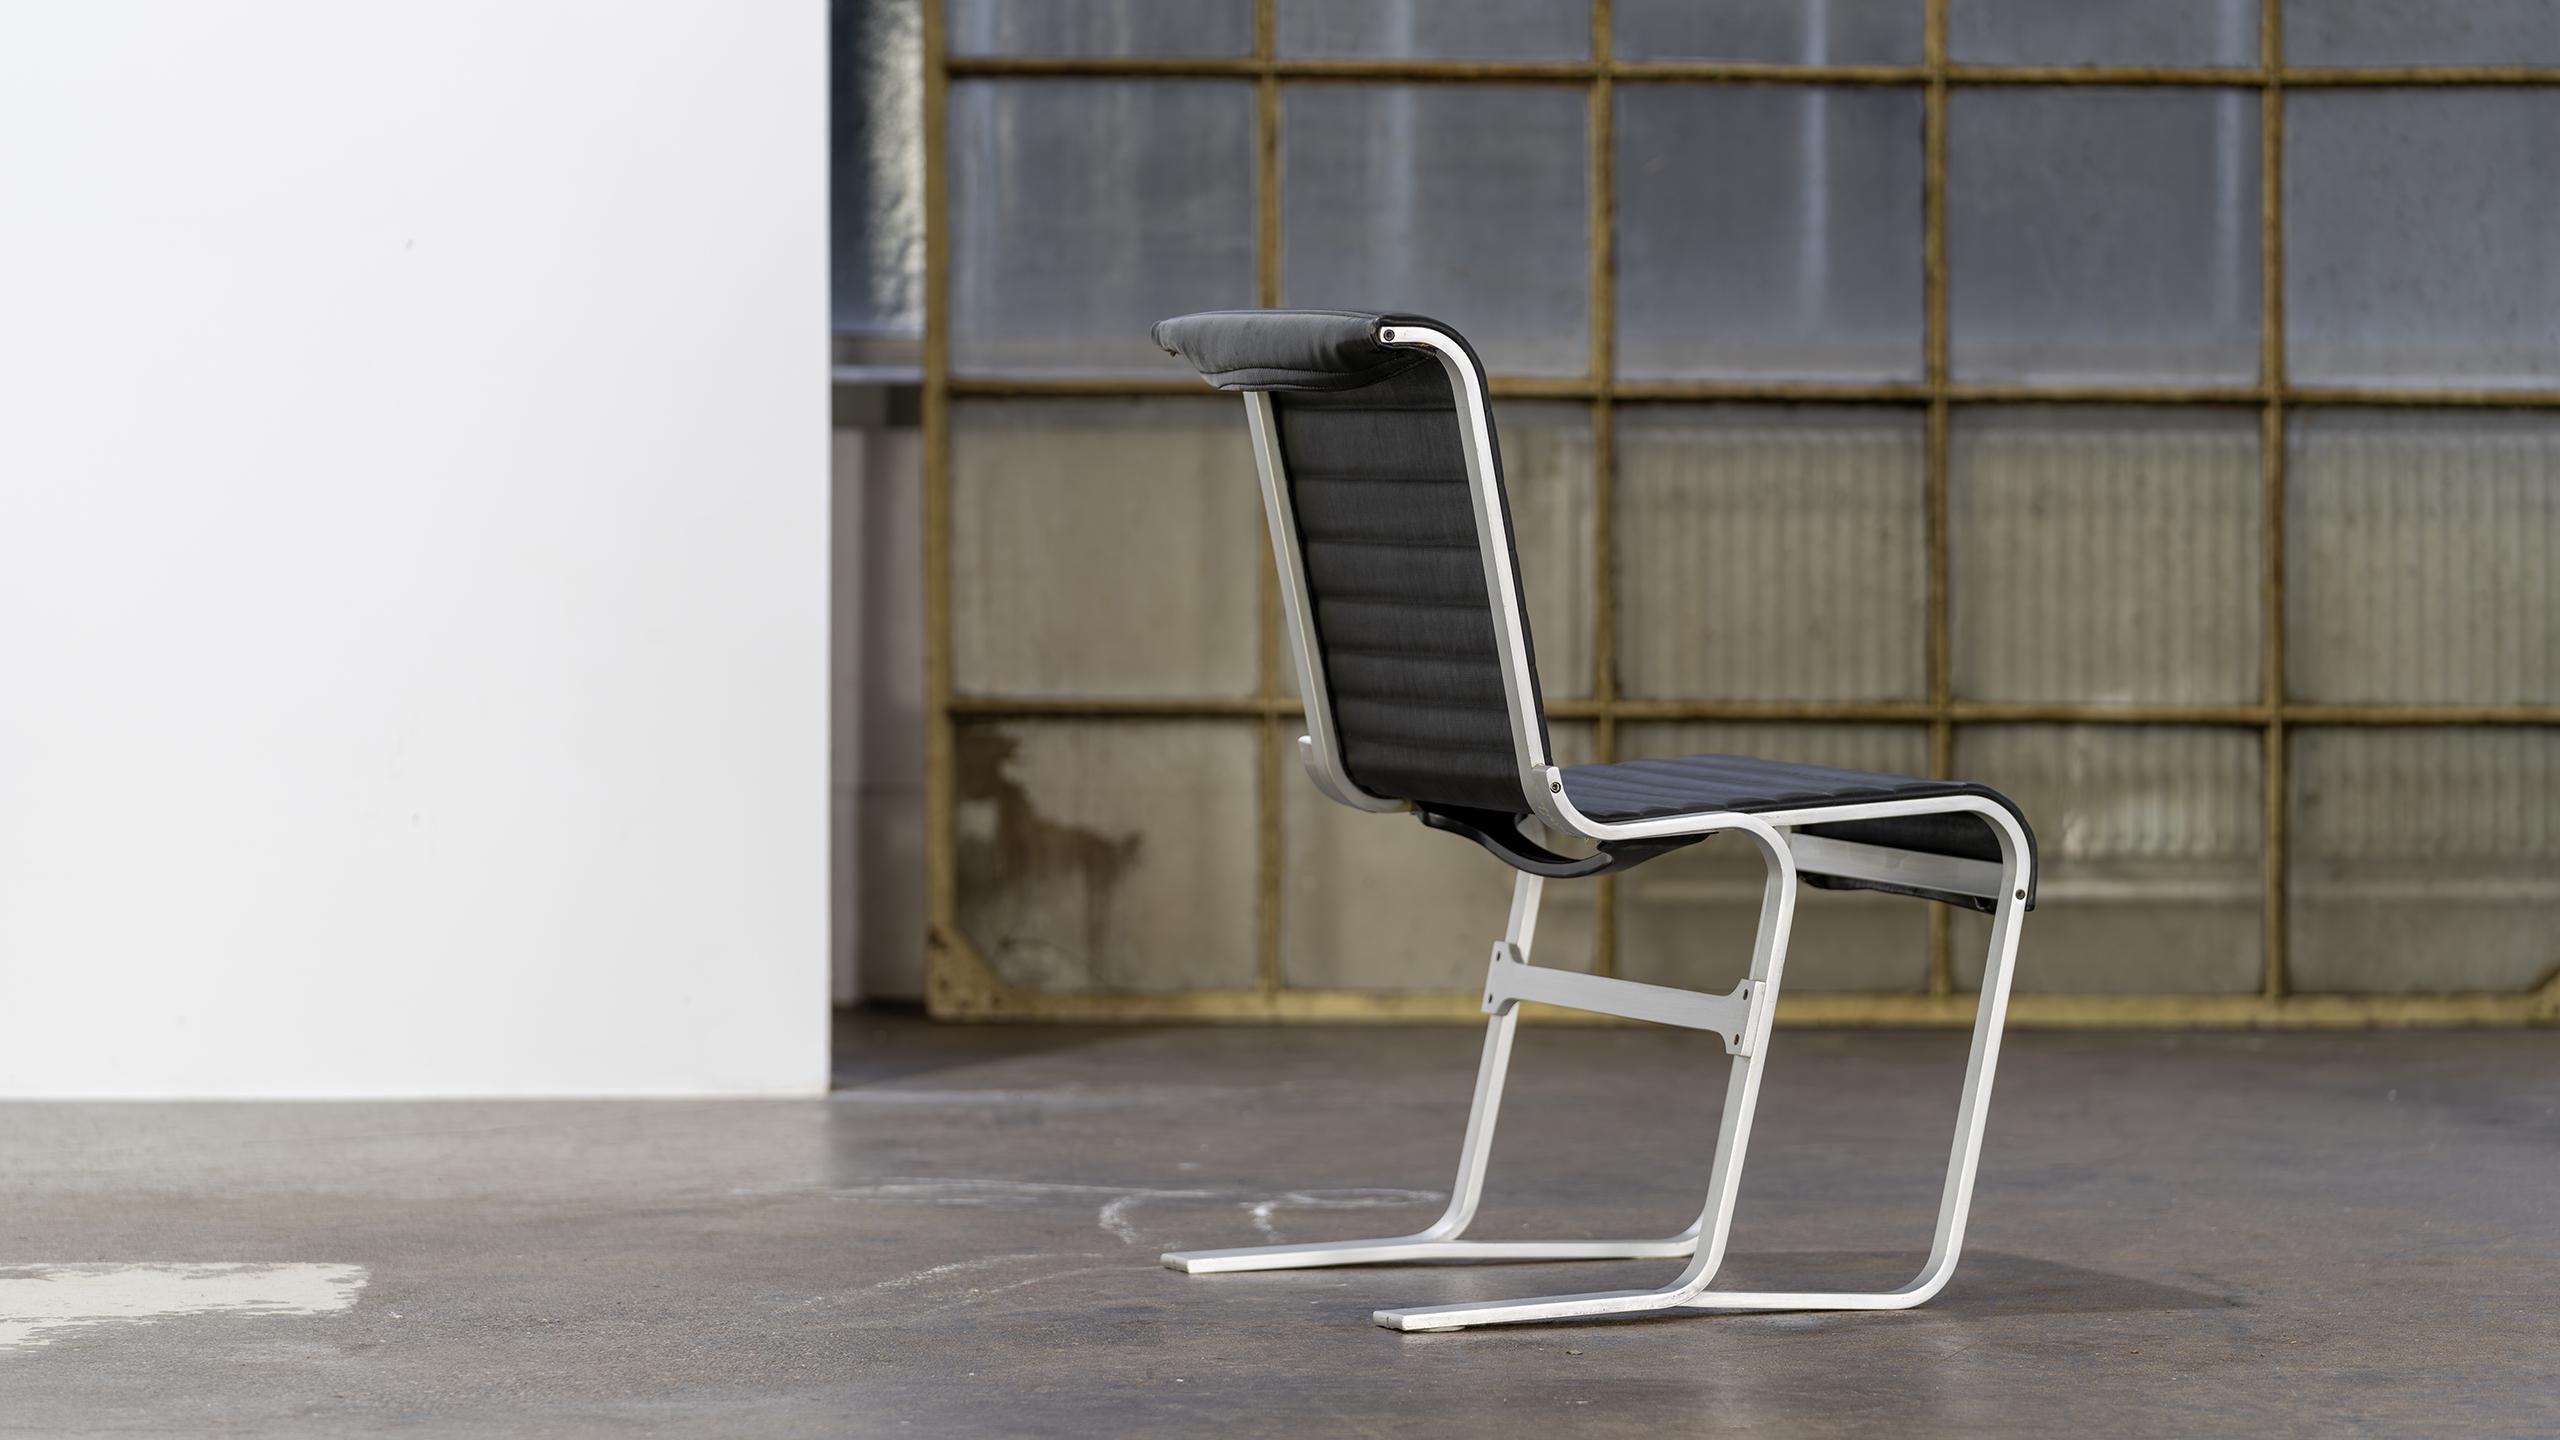 Early 20th Century Marcel Breuer Aluminium Chair 1933 ICF Cadsana Italy MoMa Museum Bauhaus Black For Sale